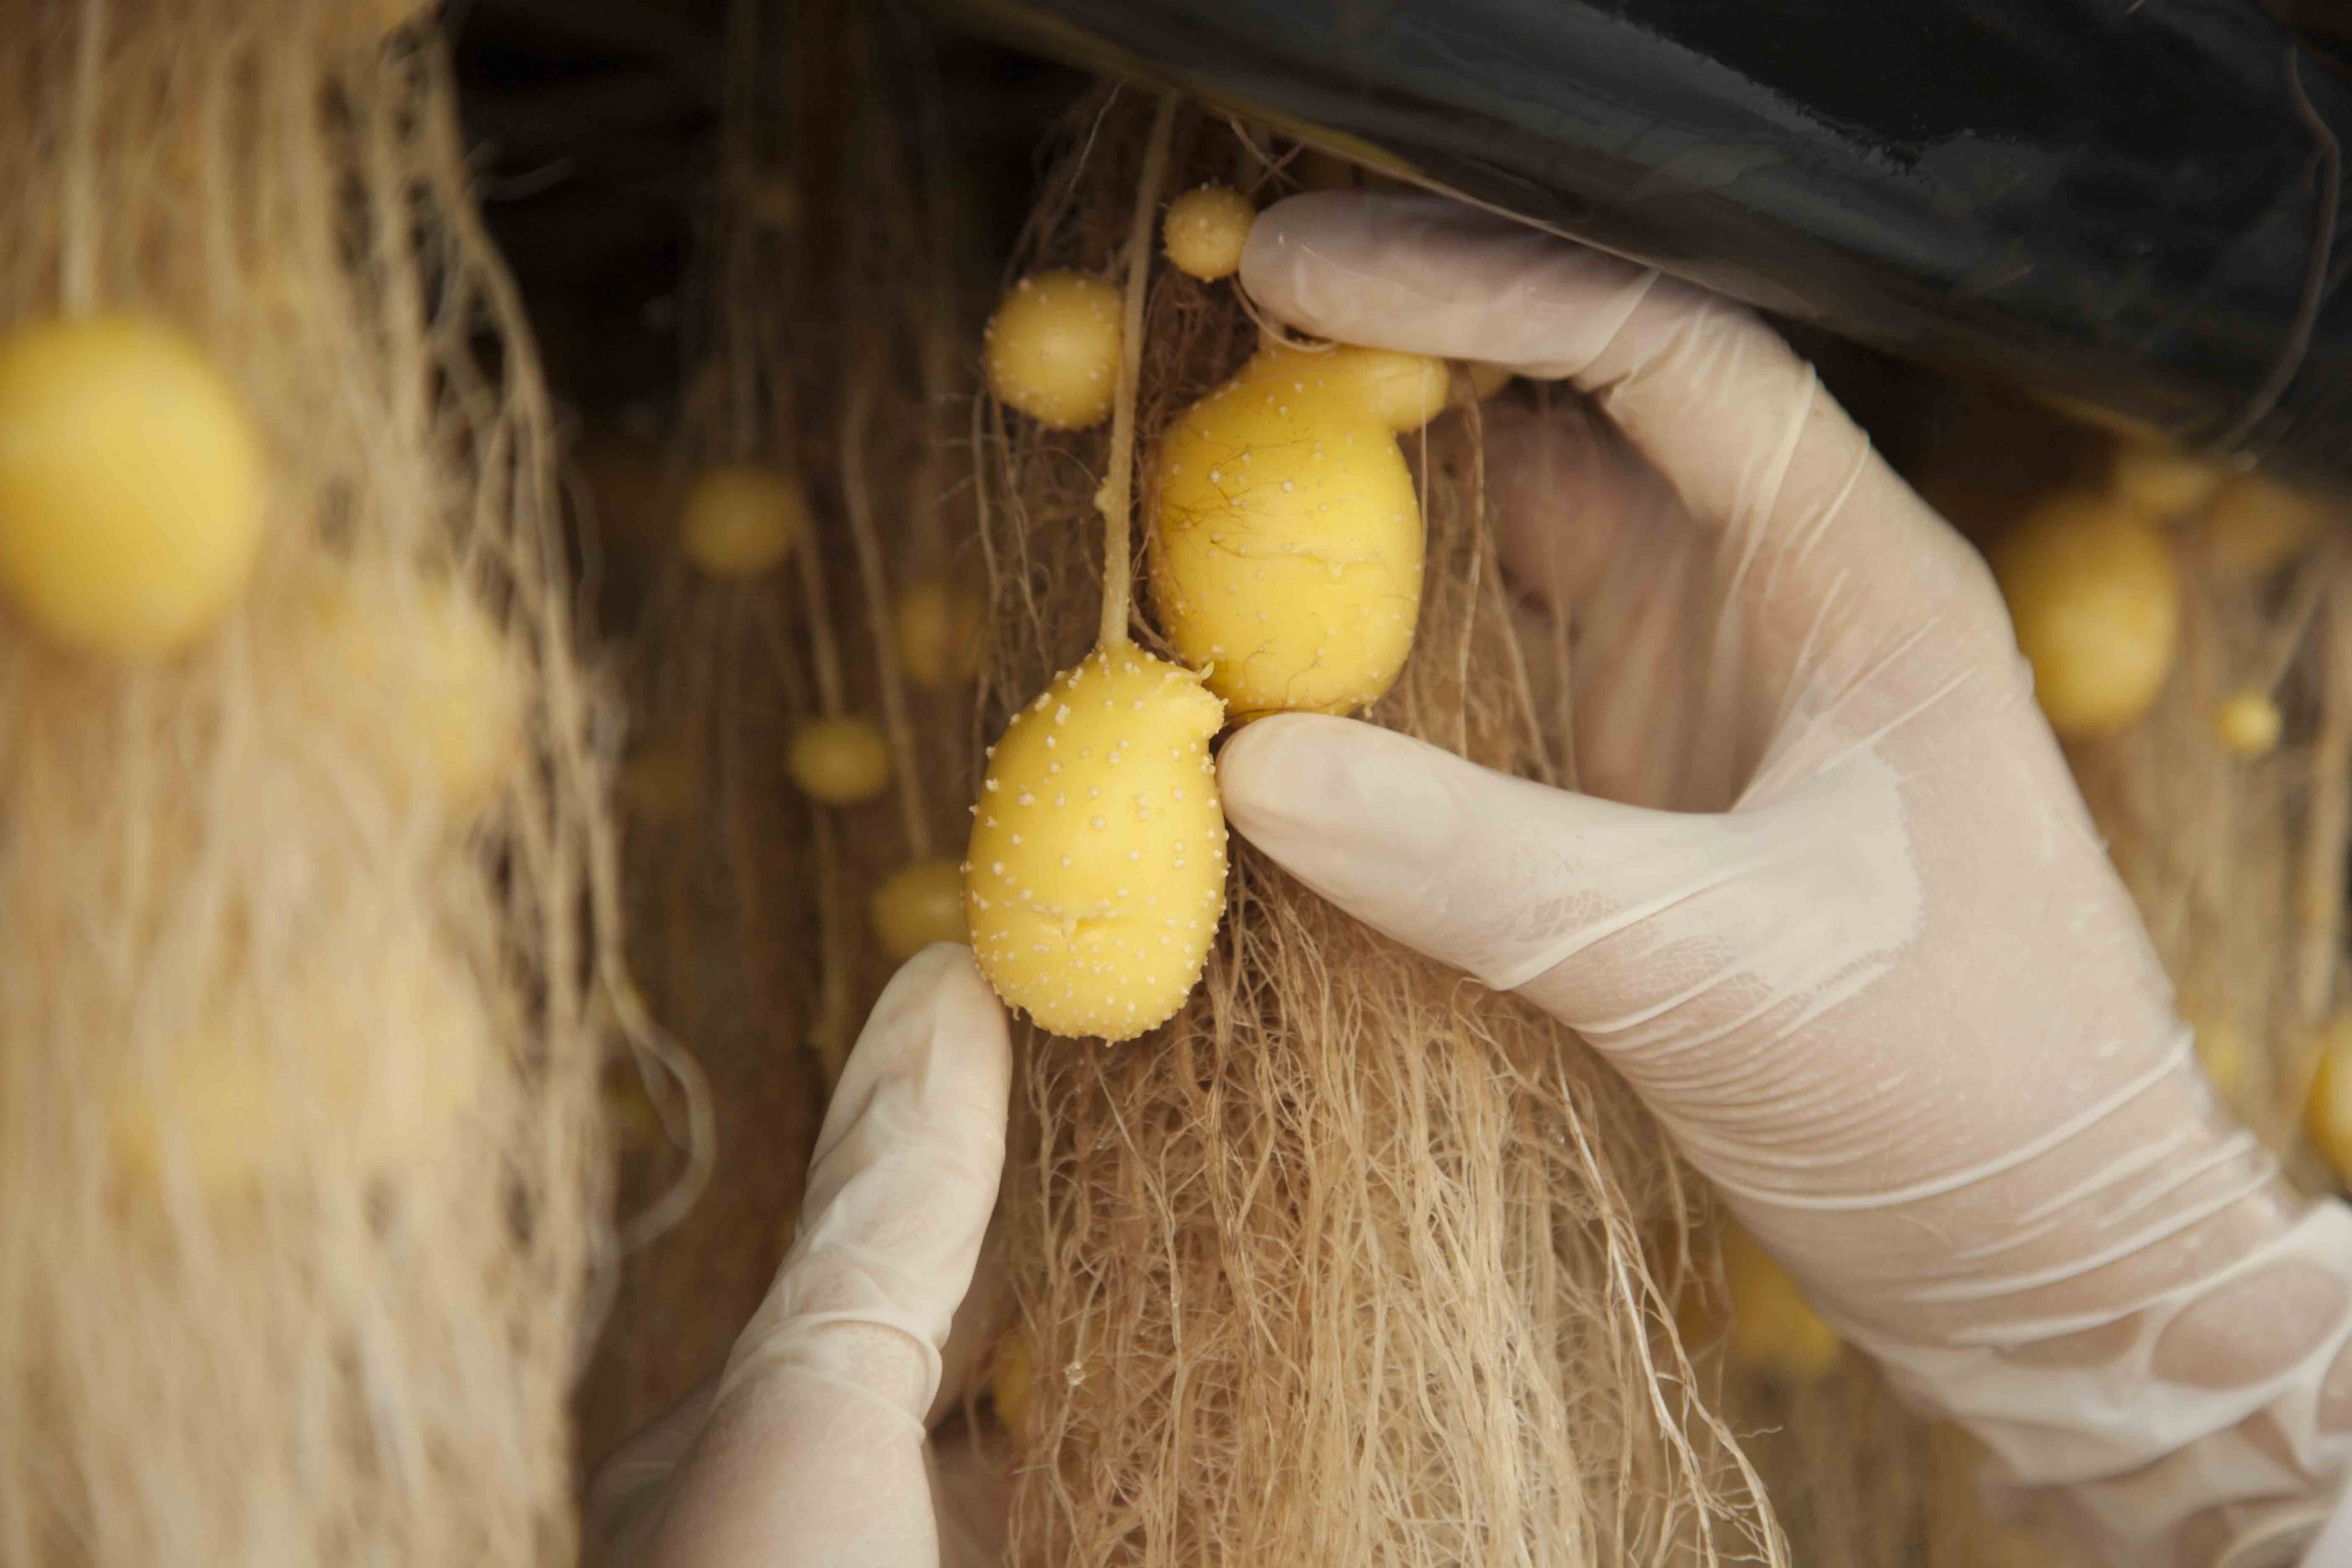 Brazilian Venture CBA Sementes Licenses Seed Potato-Growing Aeroponic Systems to Empower Farmers